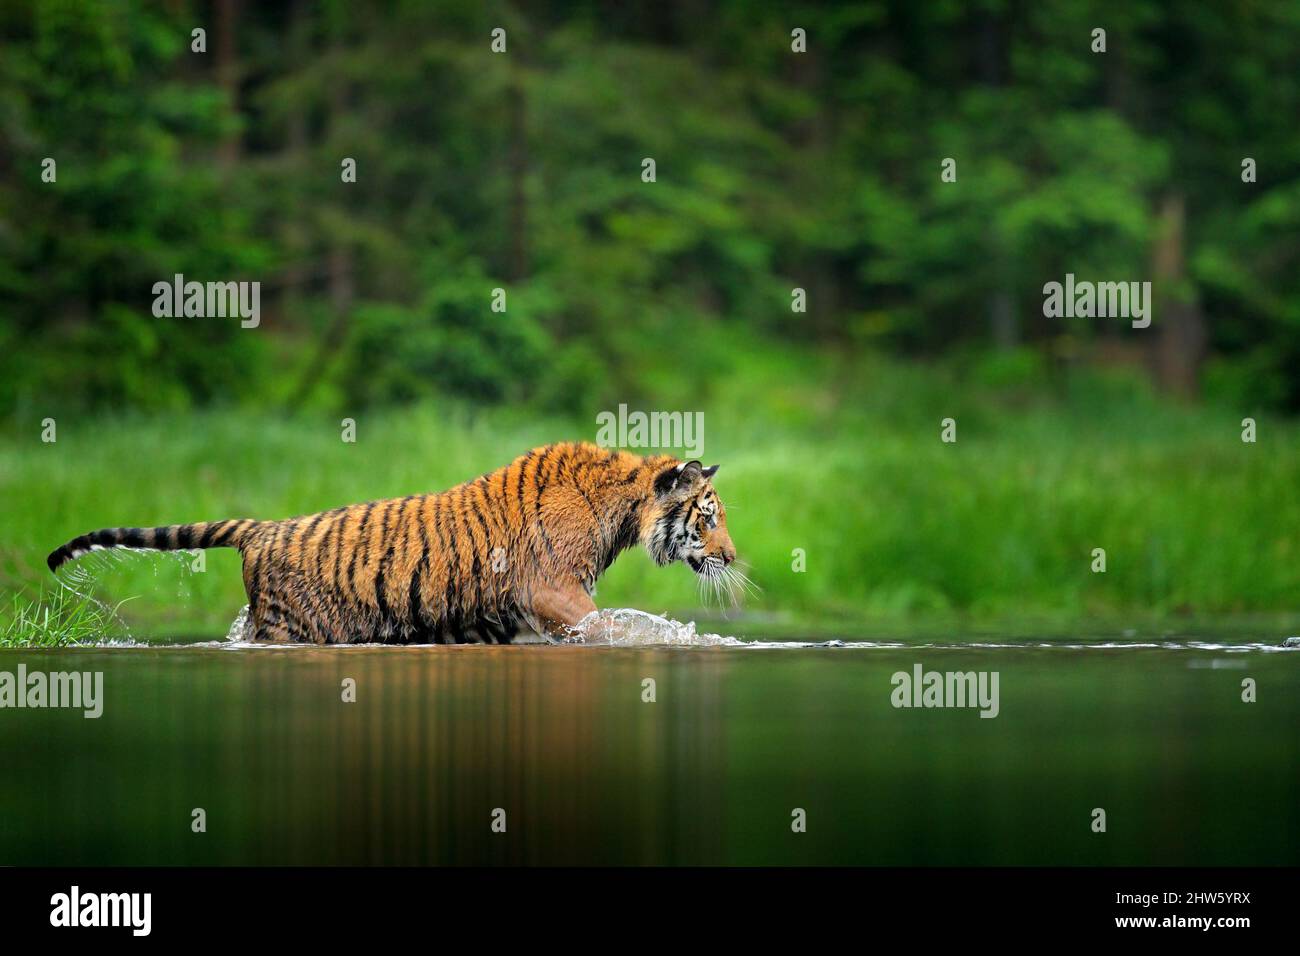 Tiger walking in lake water. Dangerous animal, tajga, Russia. Animal in green forest stream. Green grass, river droplet. Siberian tiger splashing wate Stock Photo